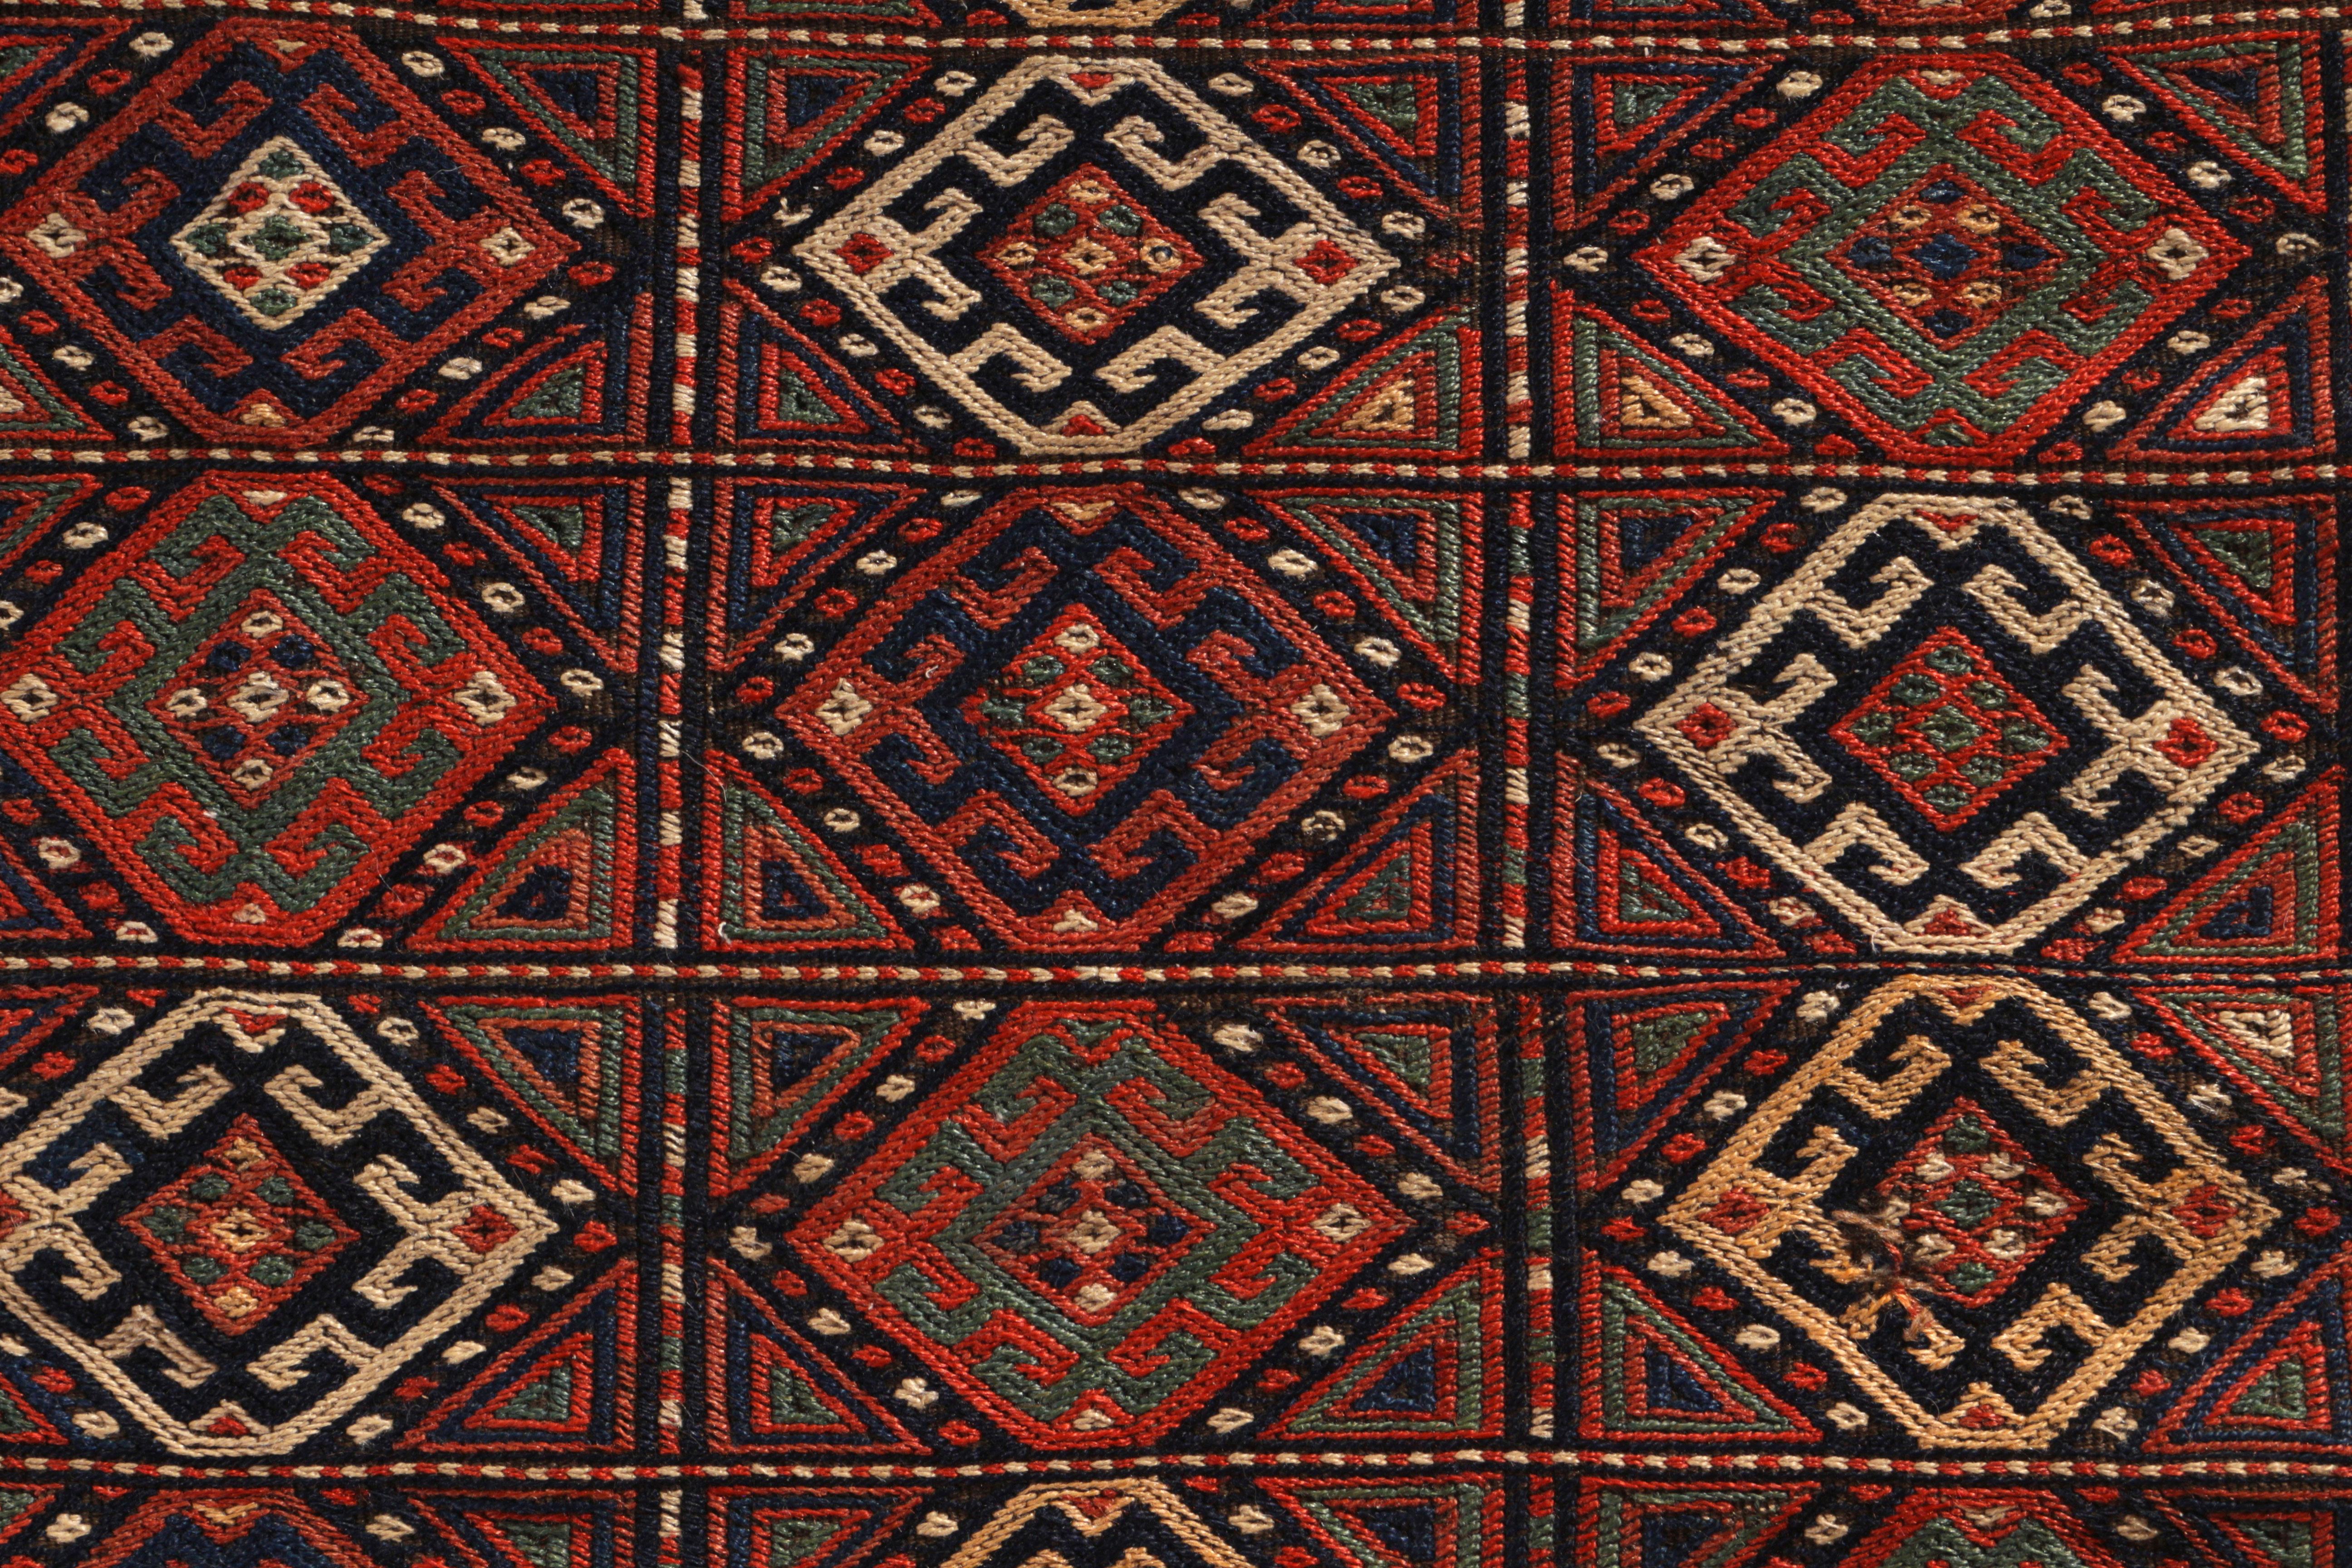 Hand-Woven Antique Soumak Kilim Red Russian Tribal Flat-Weave by Rug & Kilim